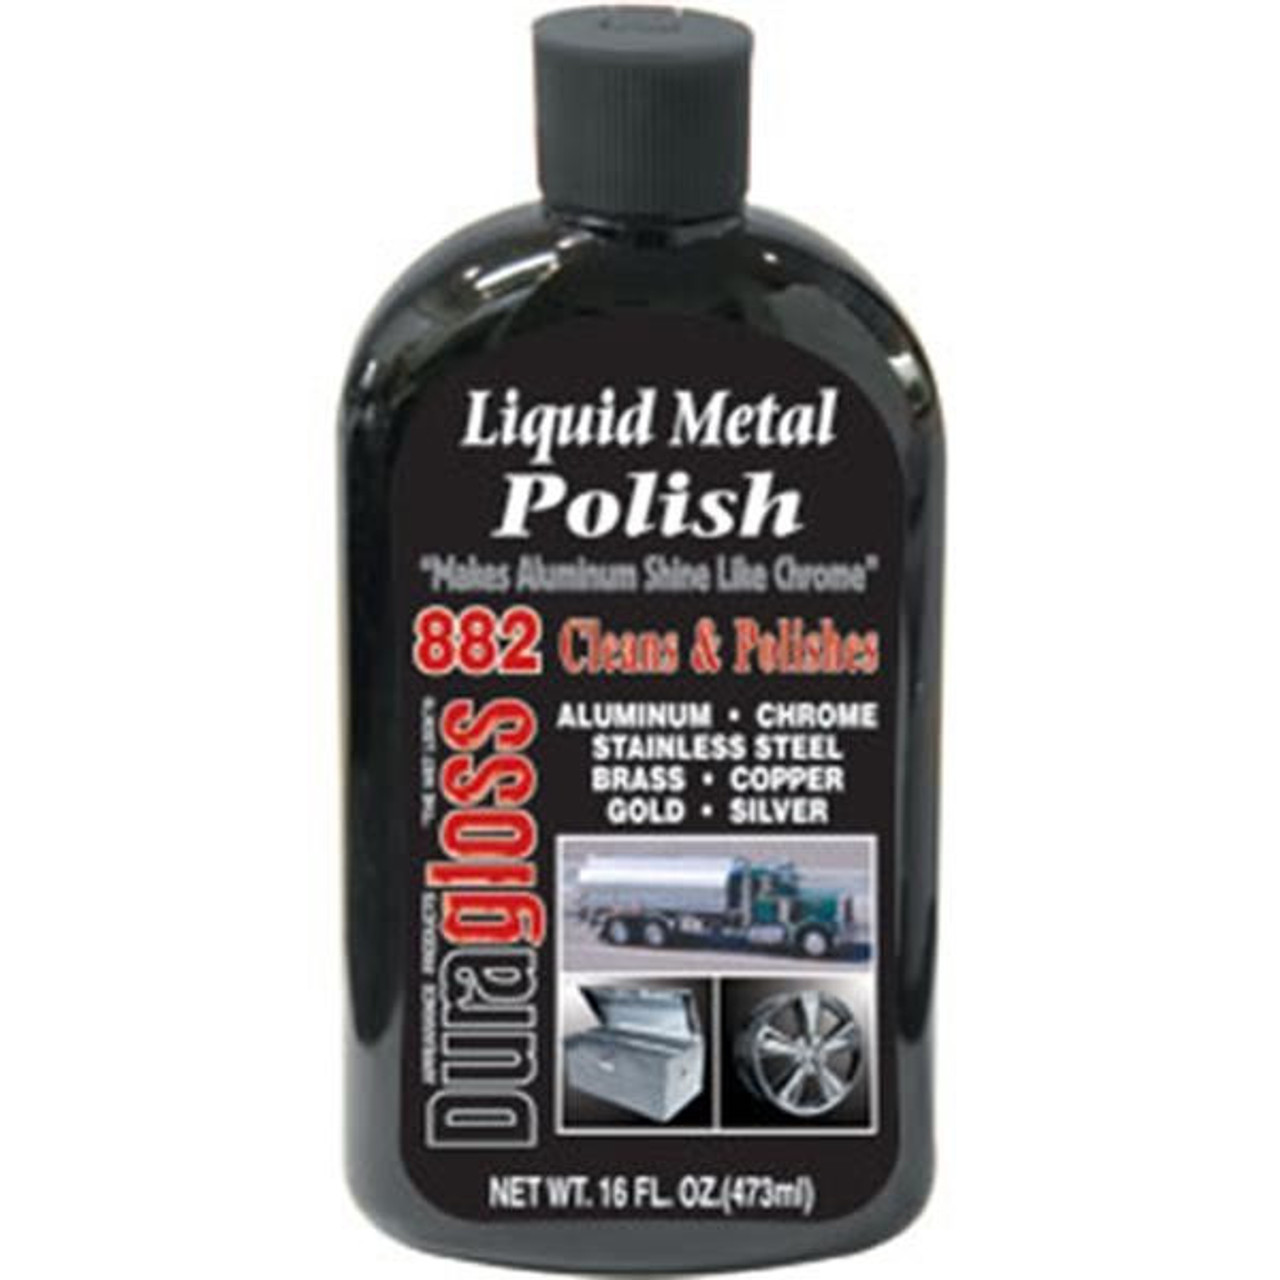 DuraGloss Liquid Metal Polish - 882 - Jendco Safety Supply